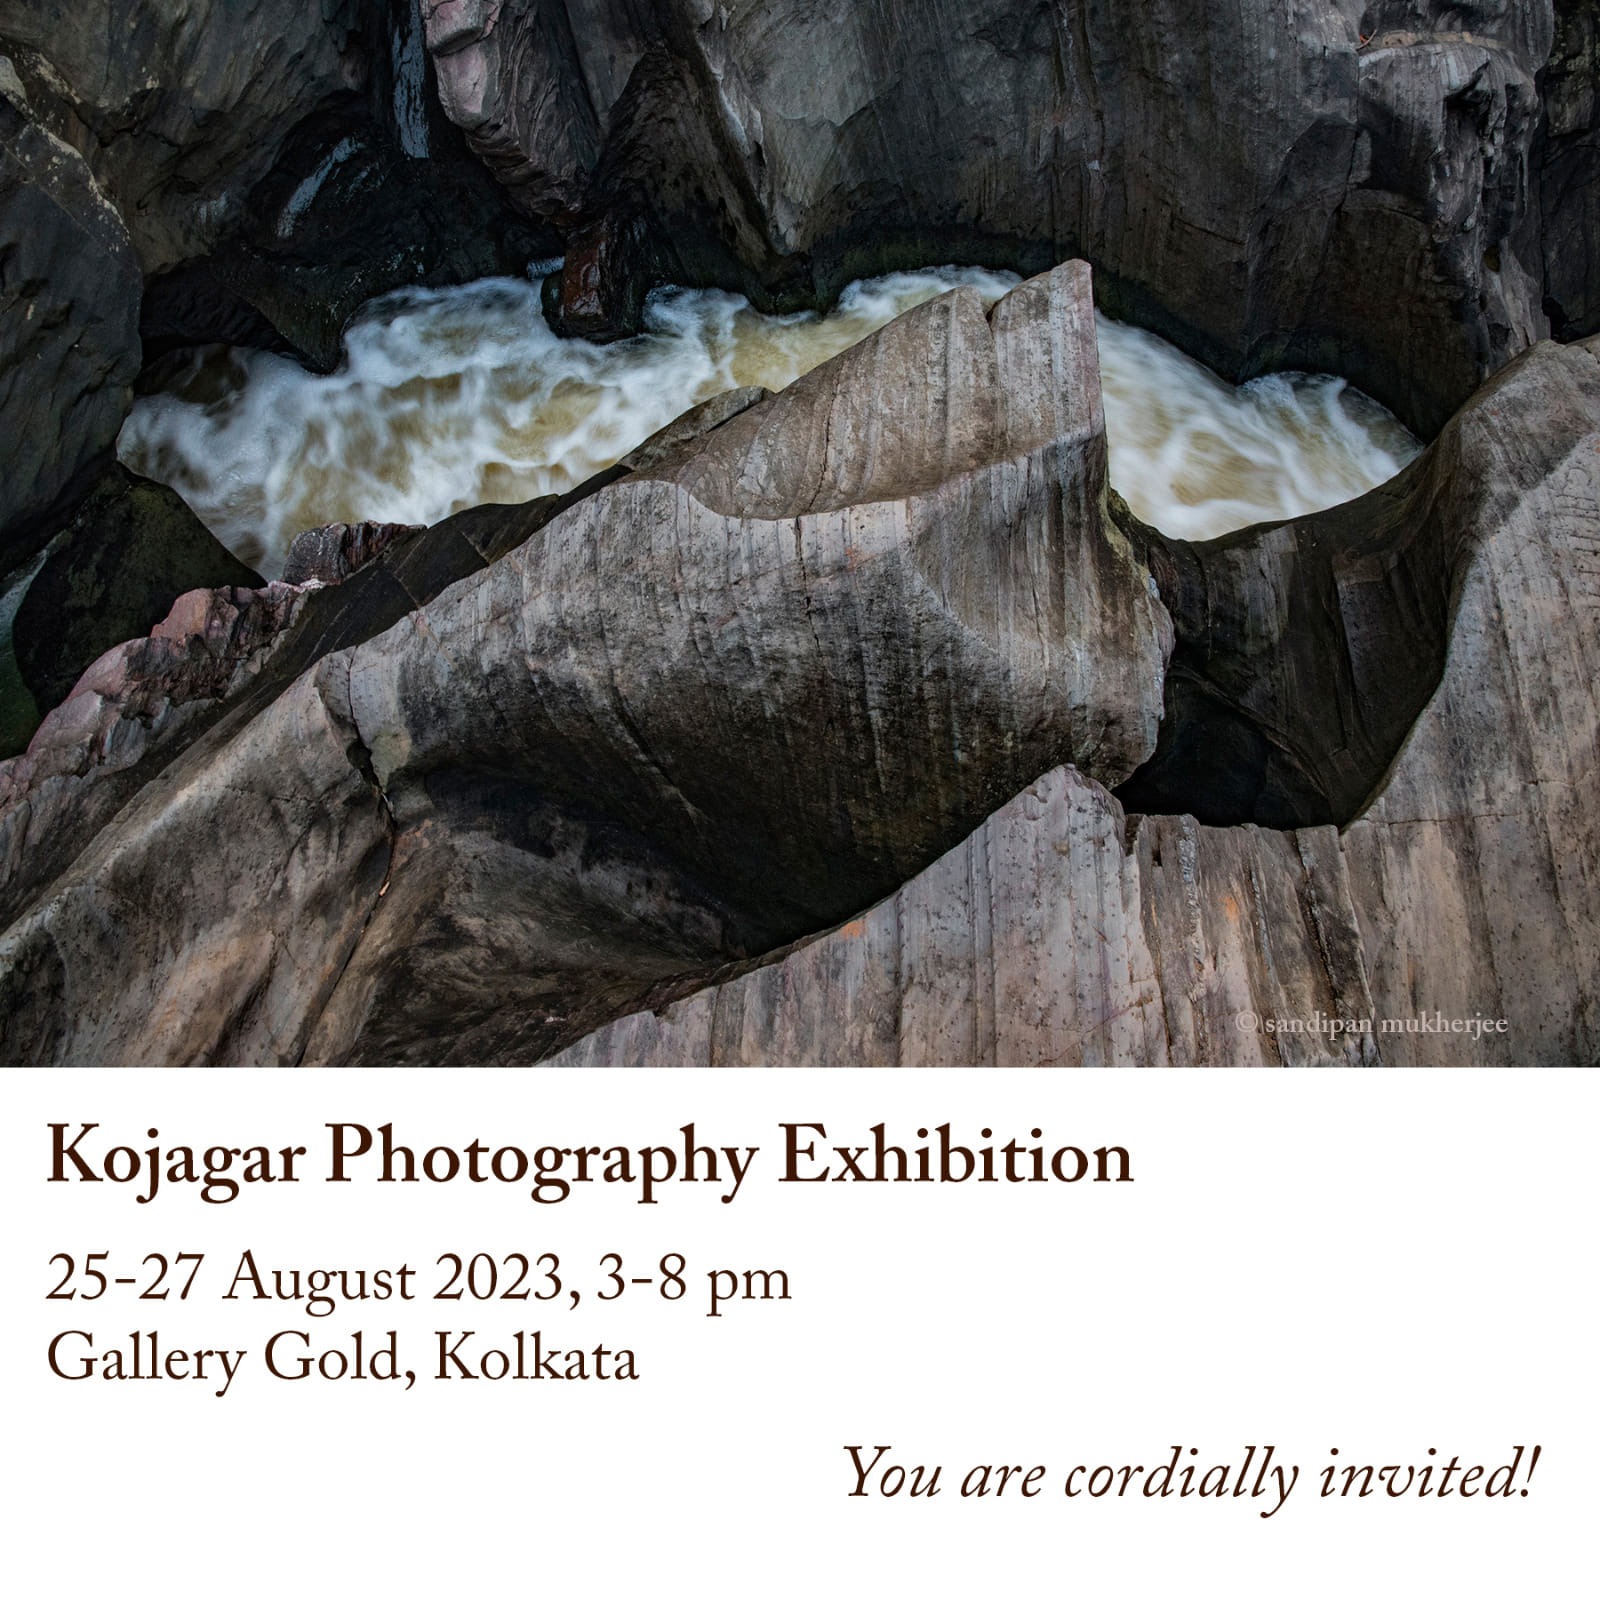 Kojagar Photography Exhibition